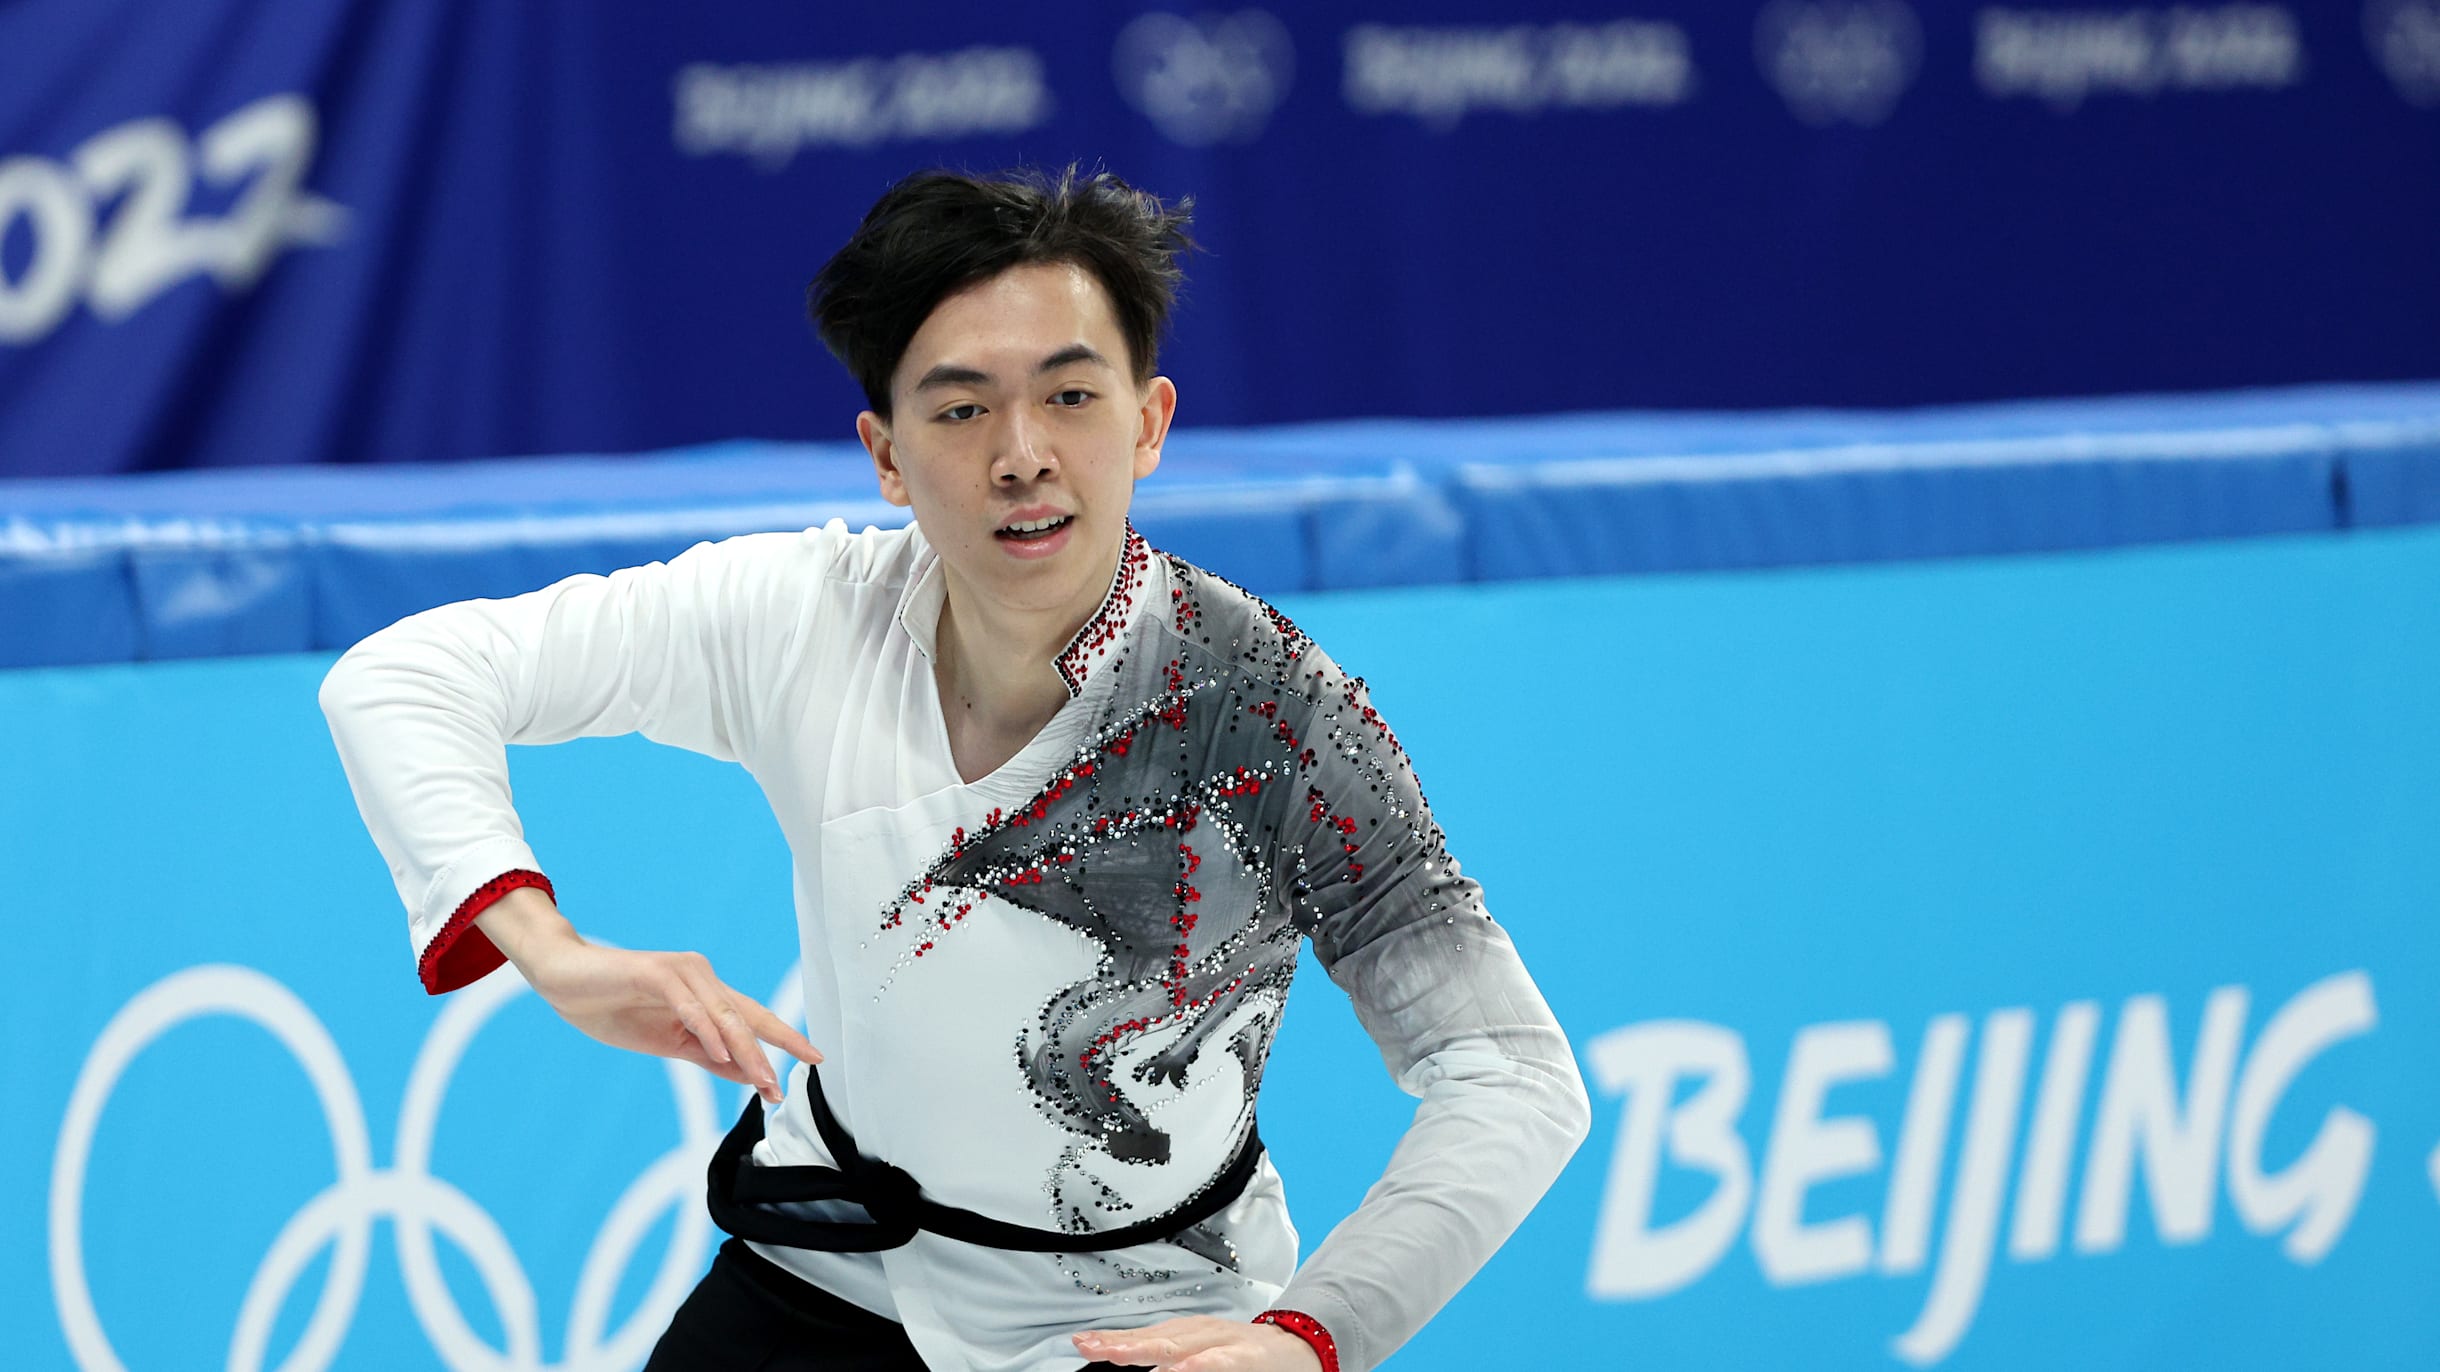 How to watch Vincent Zhou, Hanyu Yuzuru and more at the Beijing 2022 Olympic Figure Skating Gala